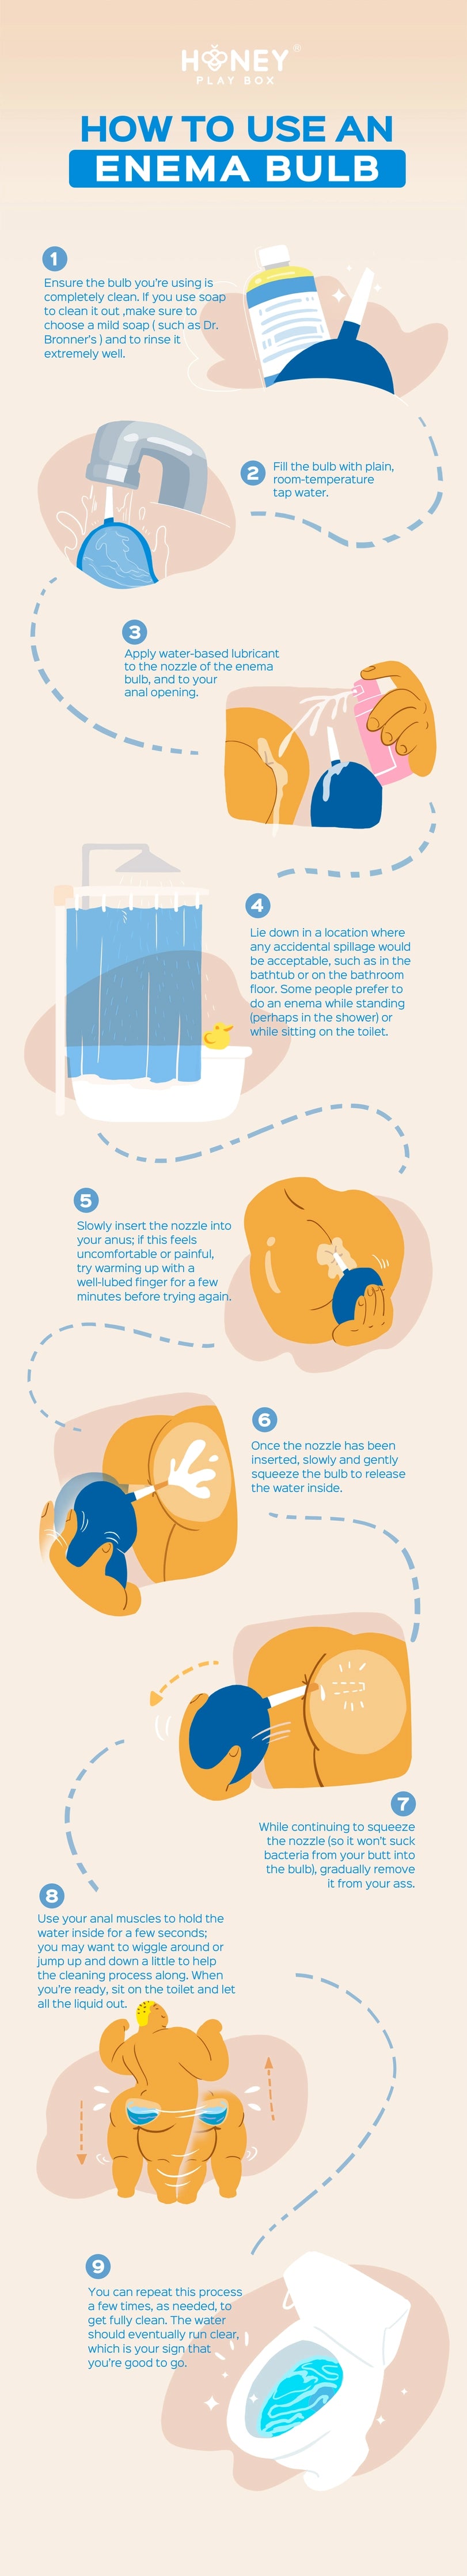 How to use an enema bulb